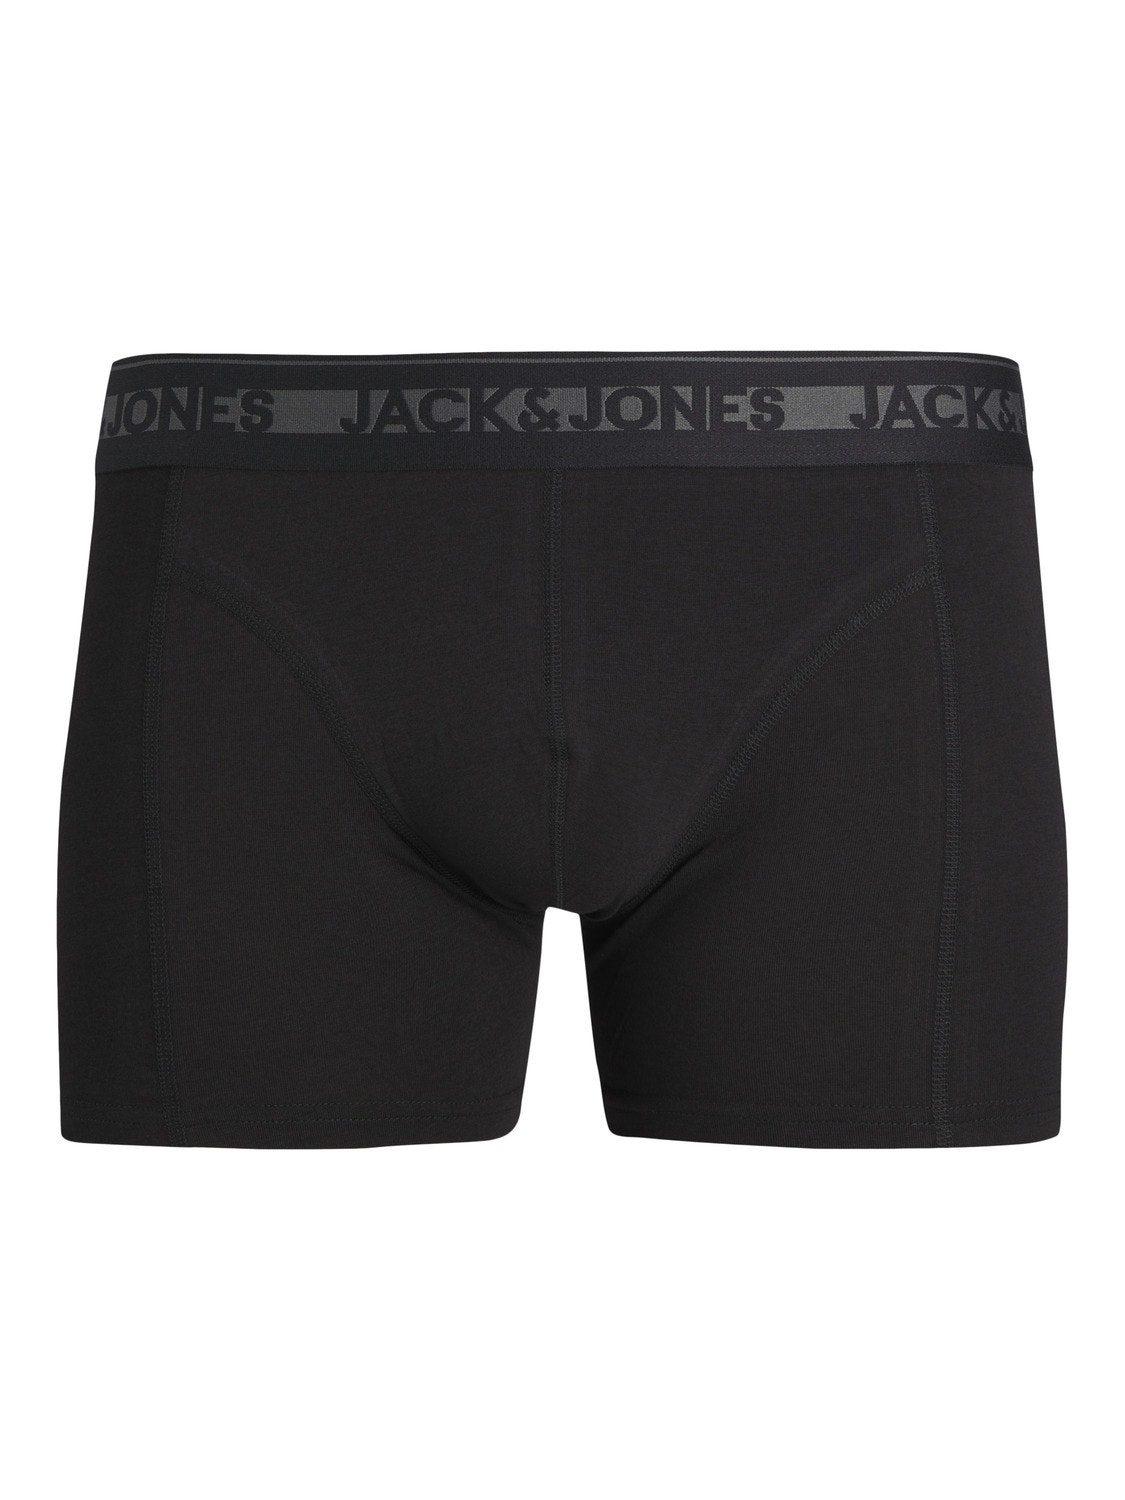 Jack & Jones 3-pak Trunks -Black - 12251470